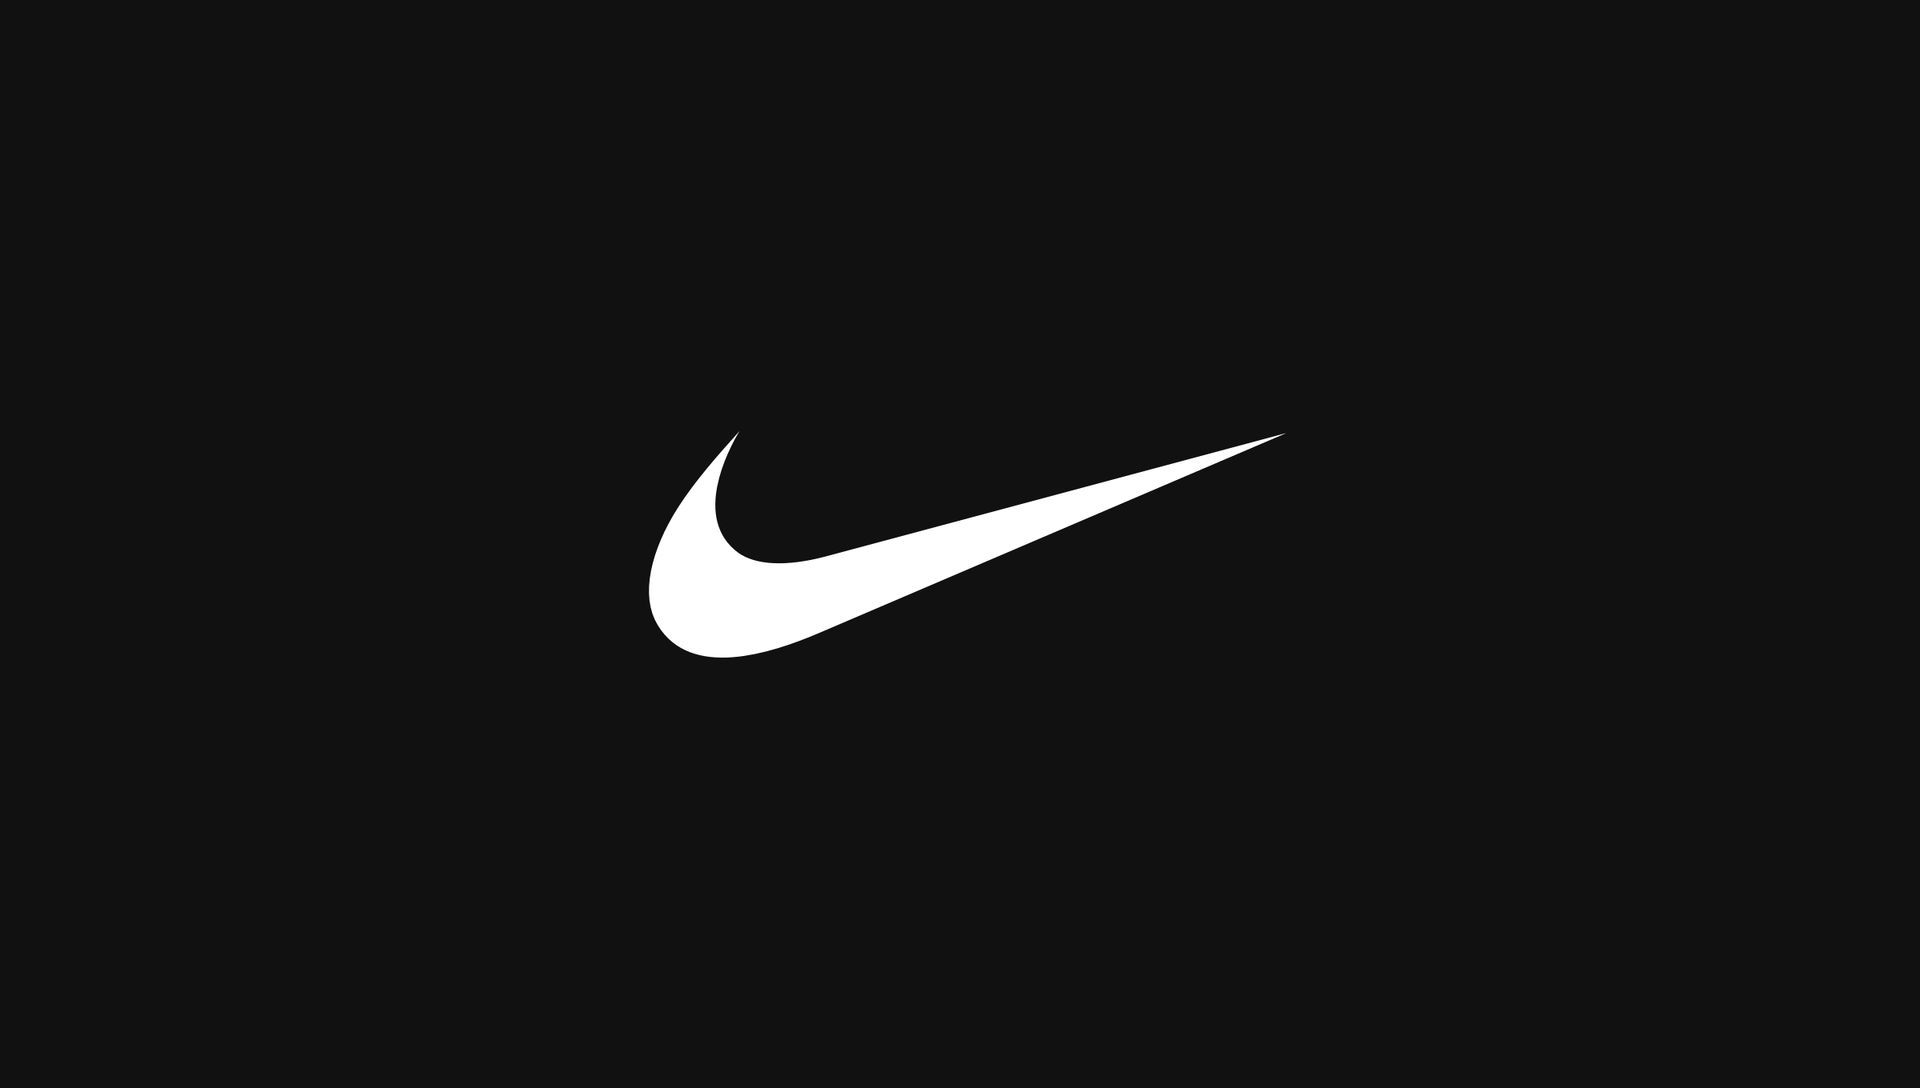 Nike stoppt Produktion